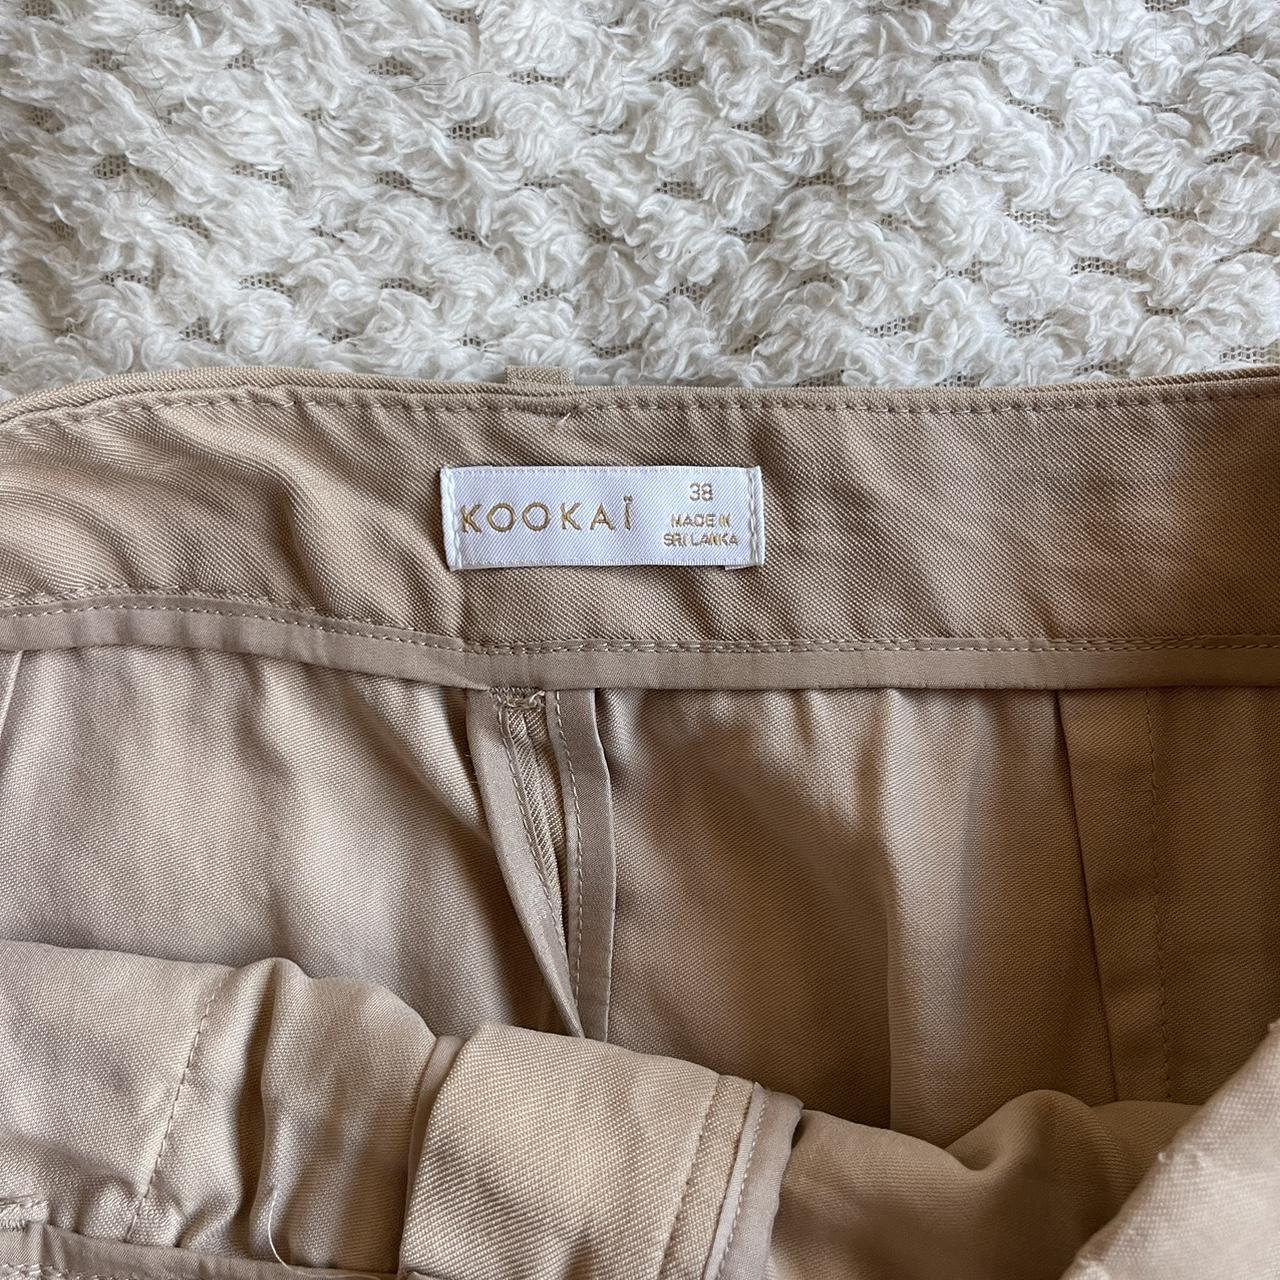 Kookai - Tailored Pant - Tan Size 38 (AU10) Worn... - Depop